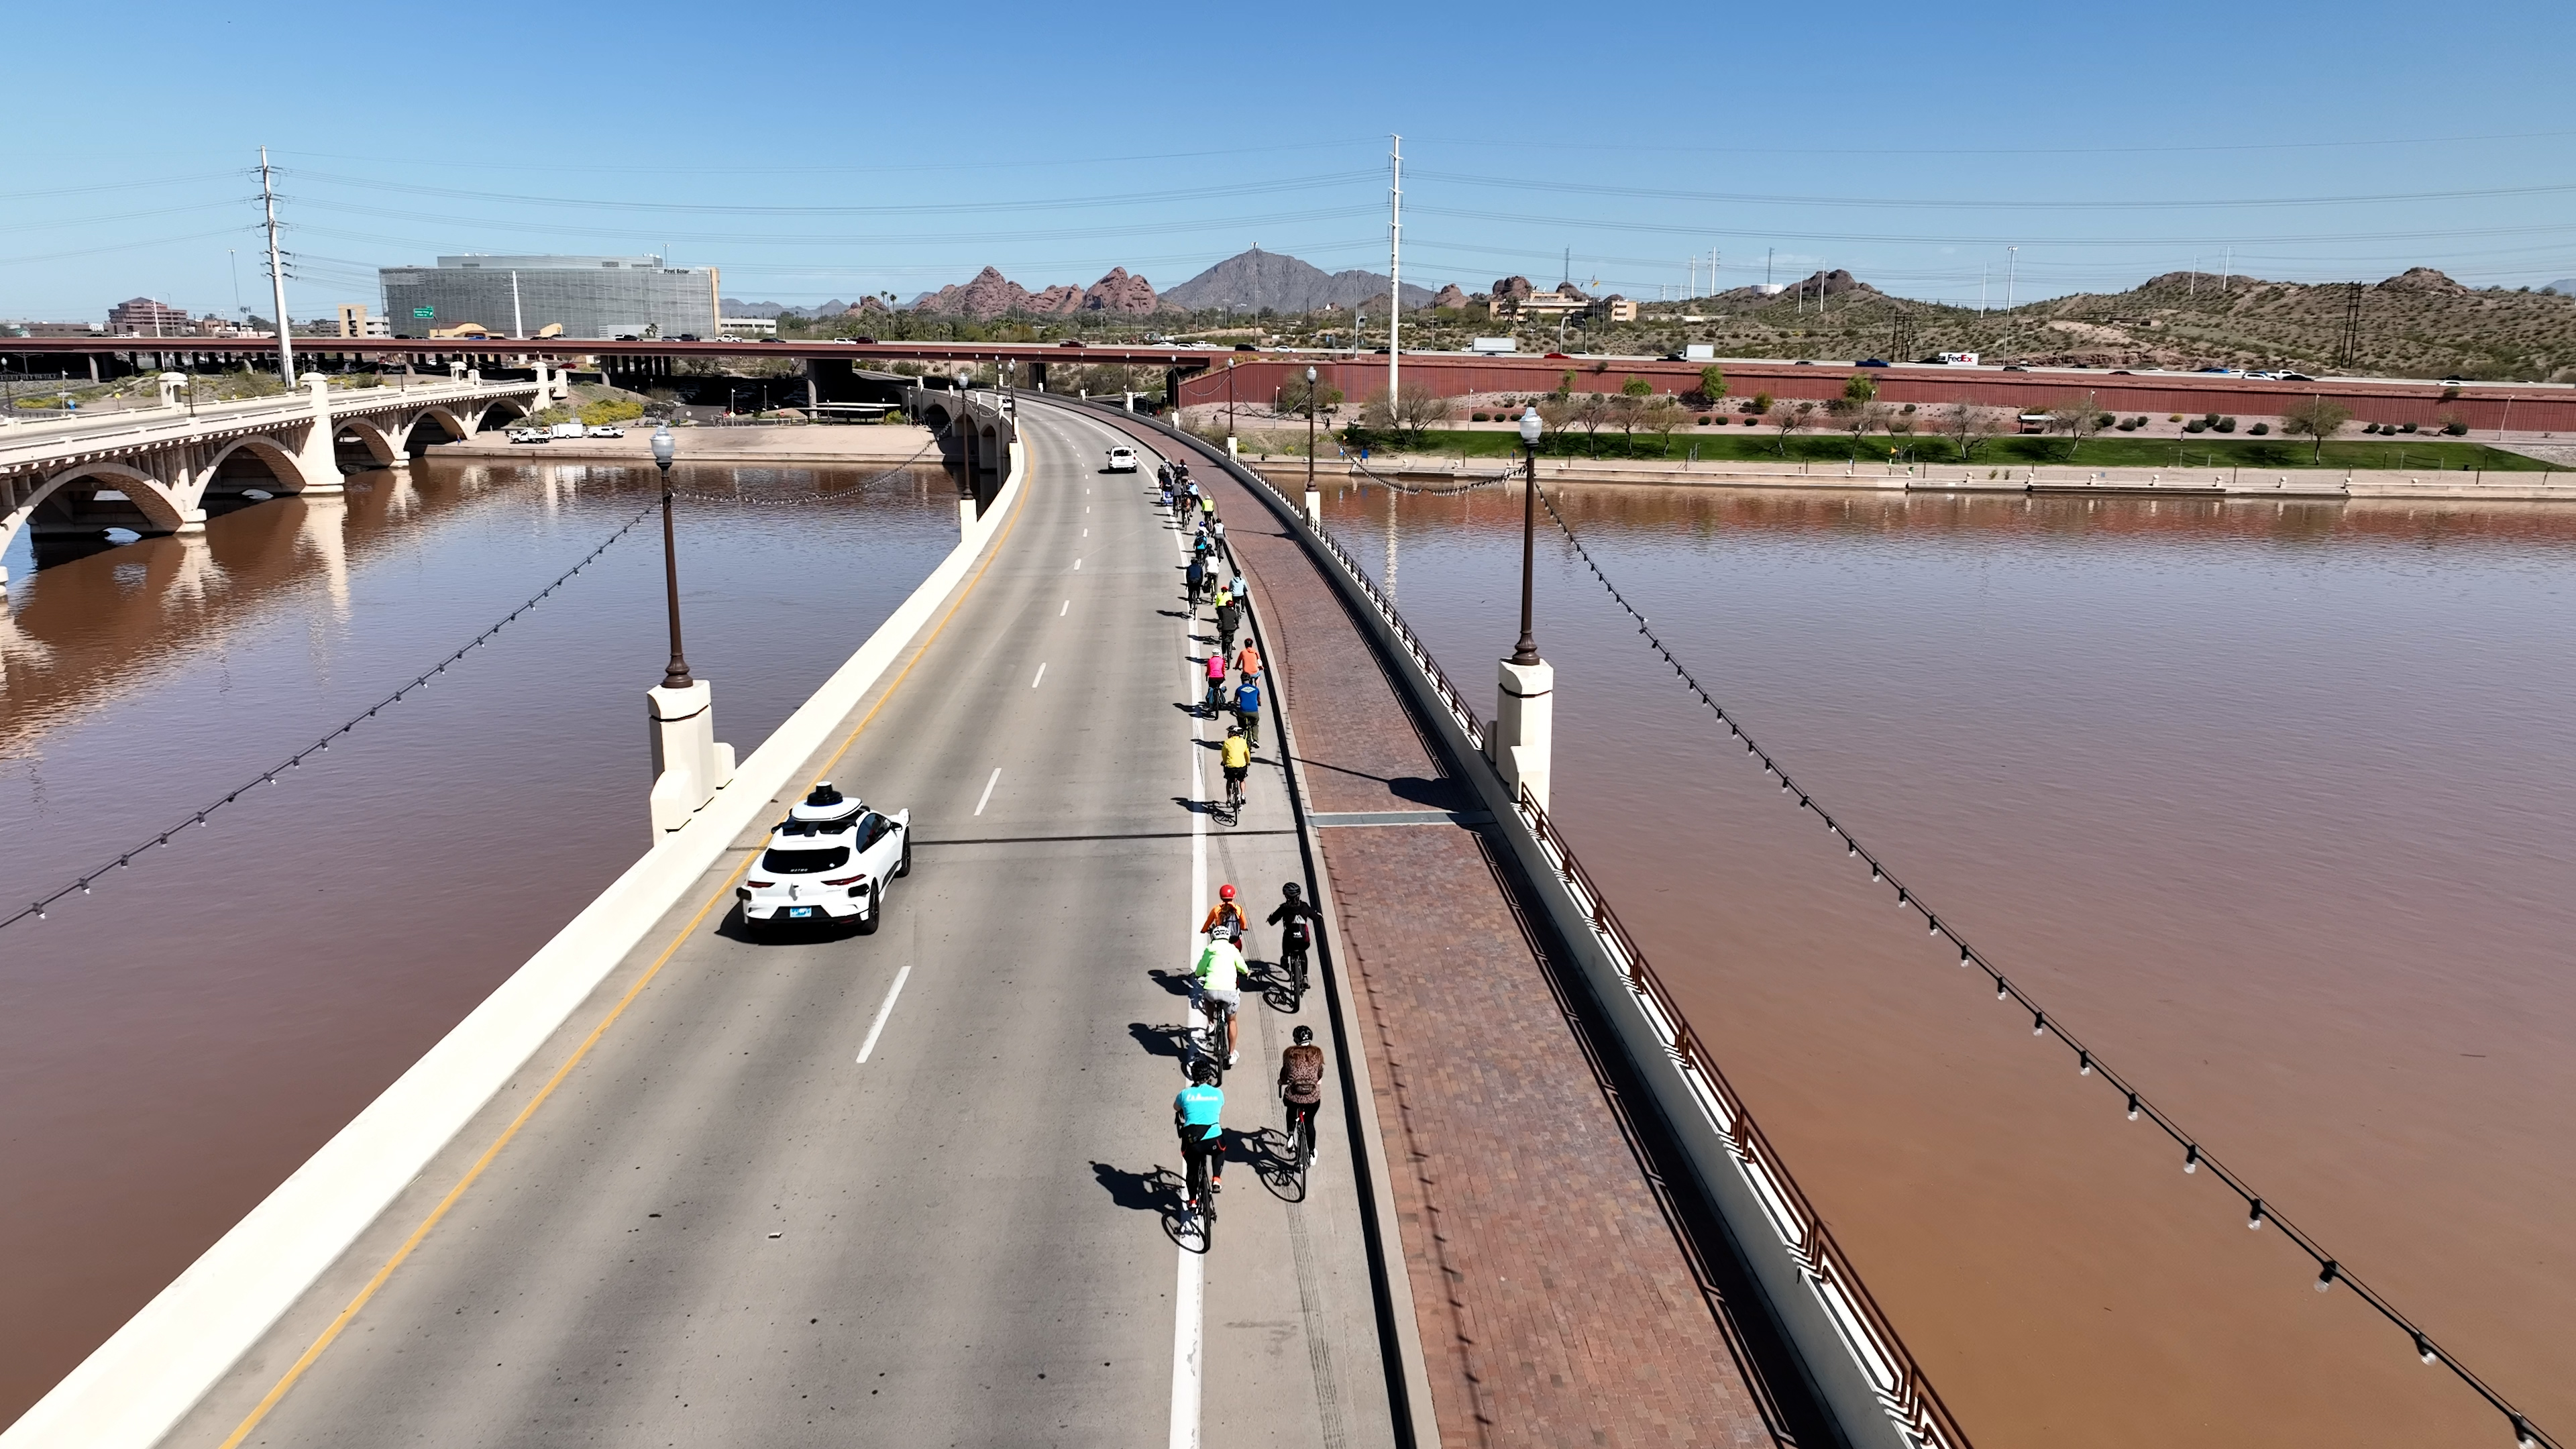 Waymo vehicle in far left lane crossing a bridge alongside many cyclists in the bike lane on the far right